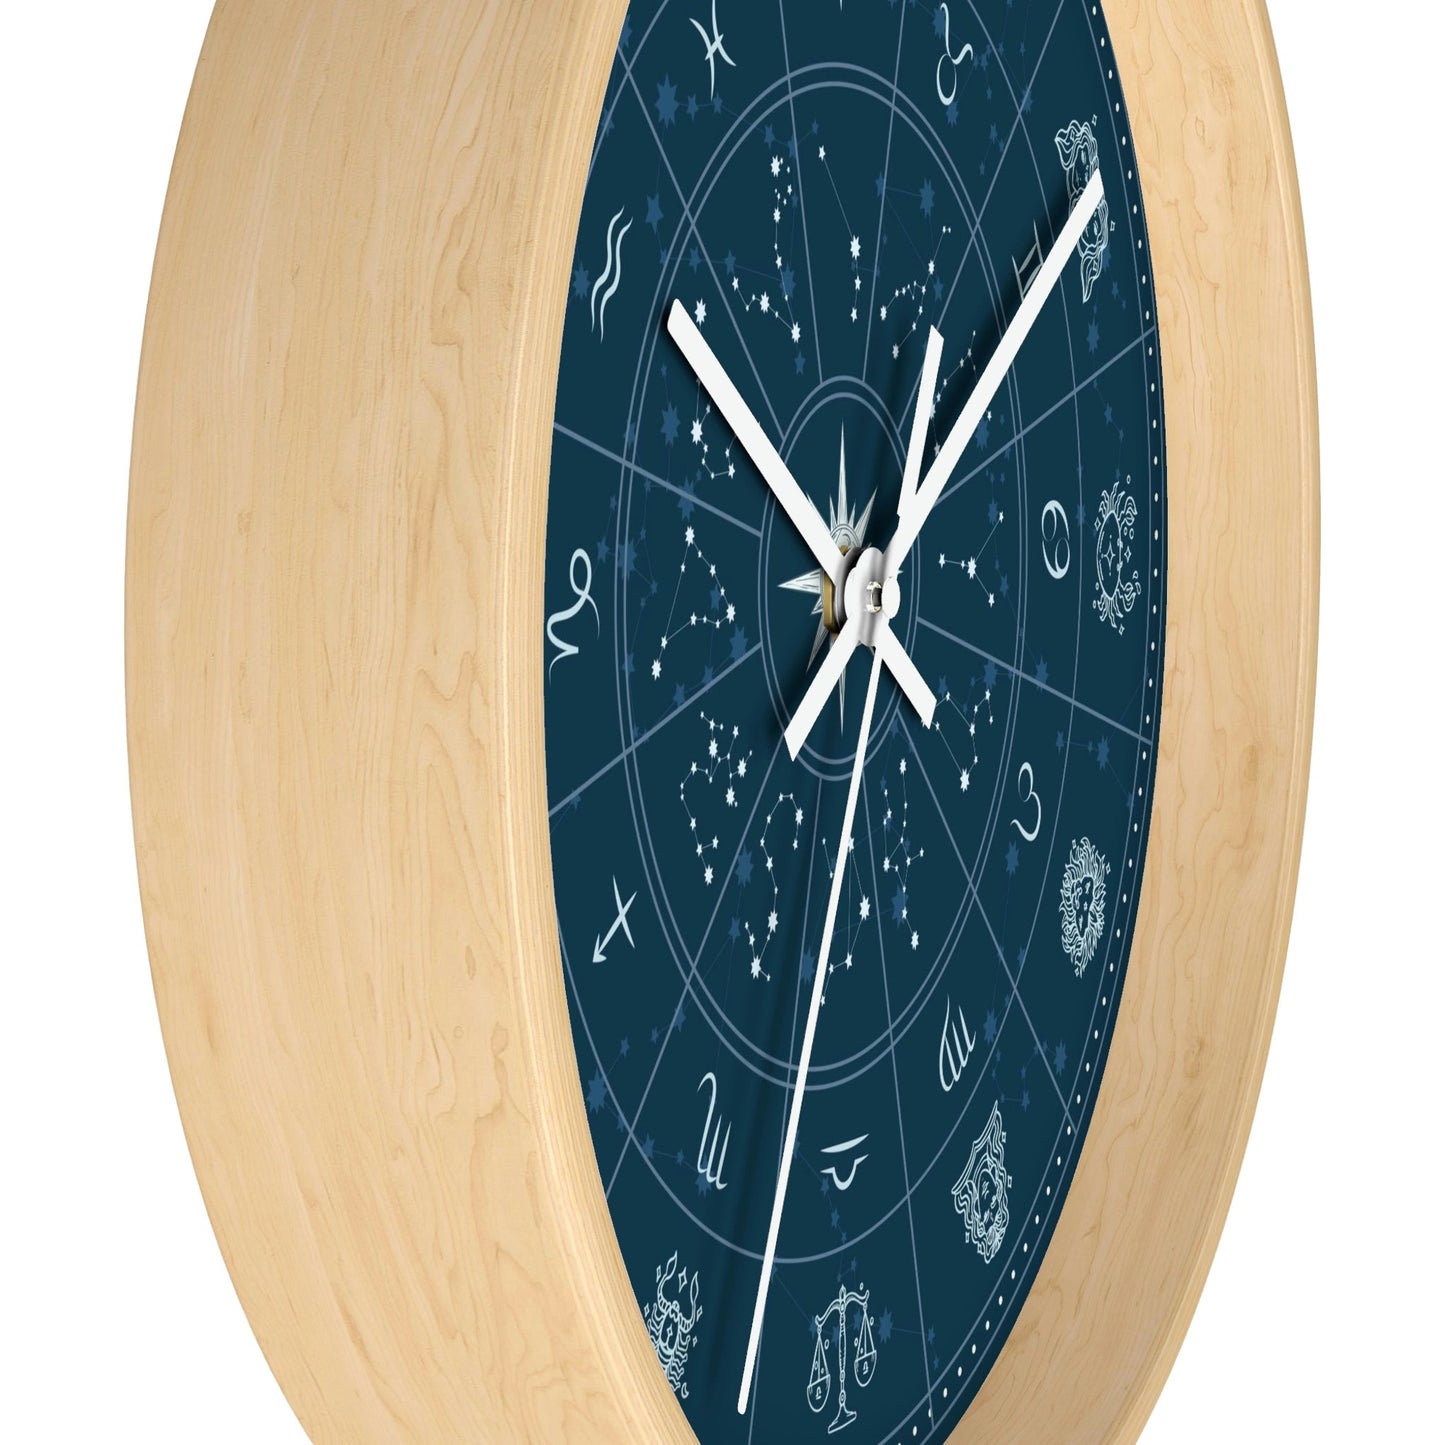 Astrology Wall Clock